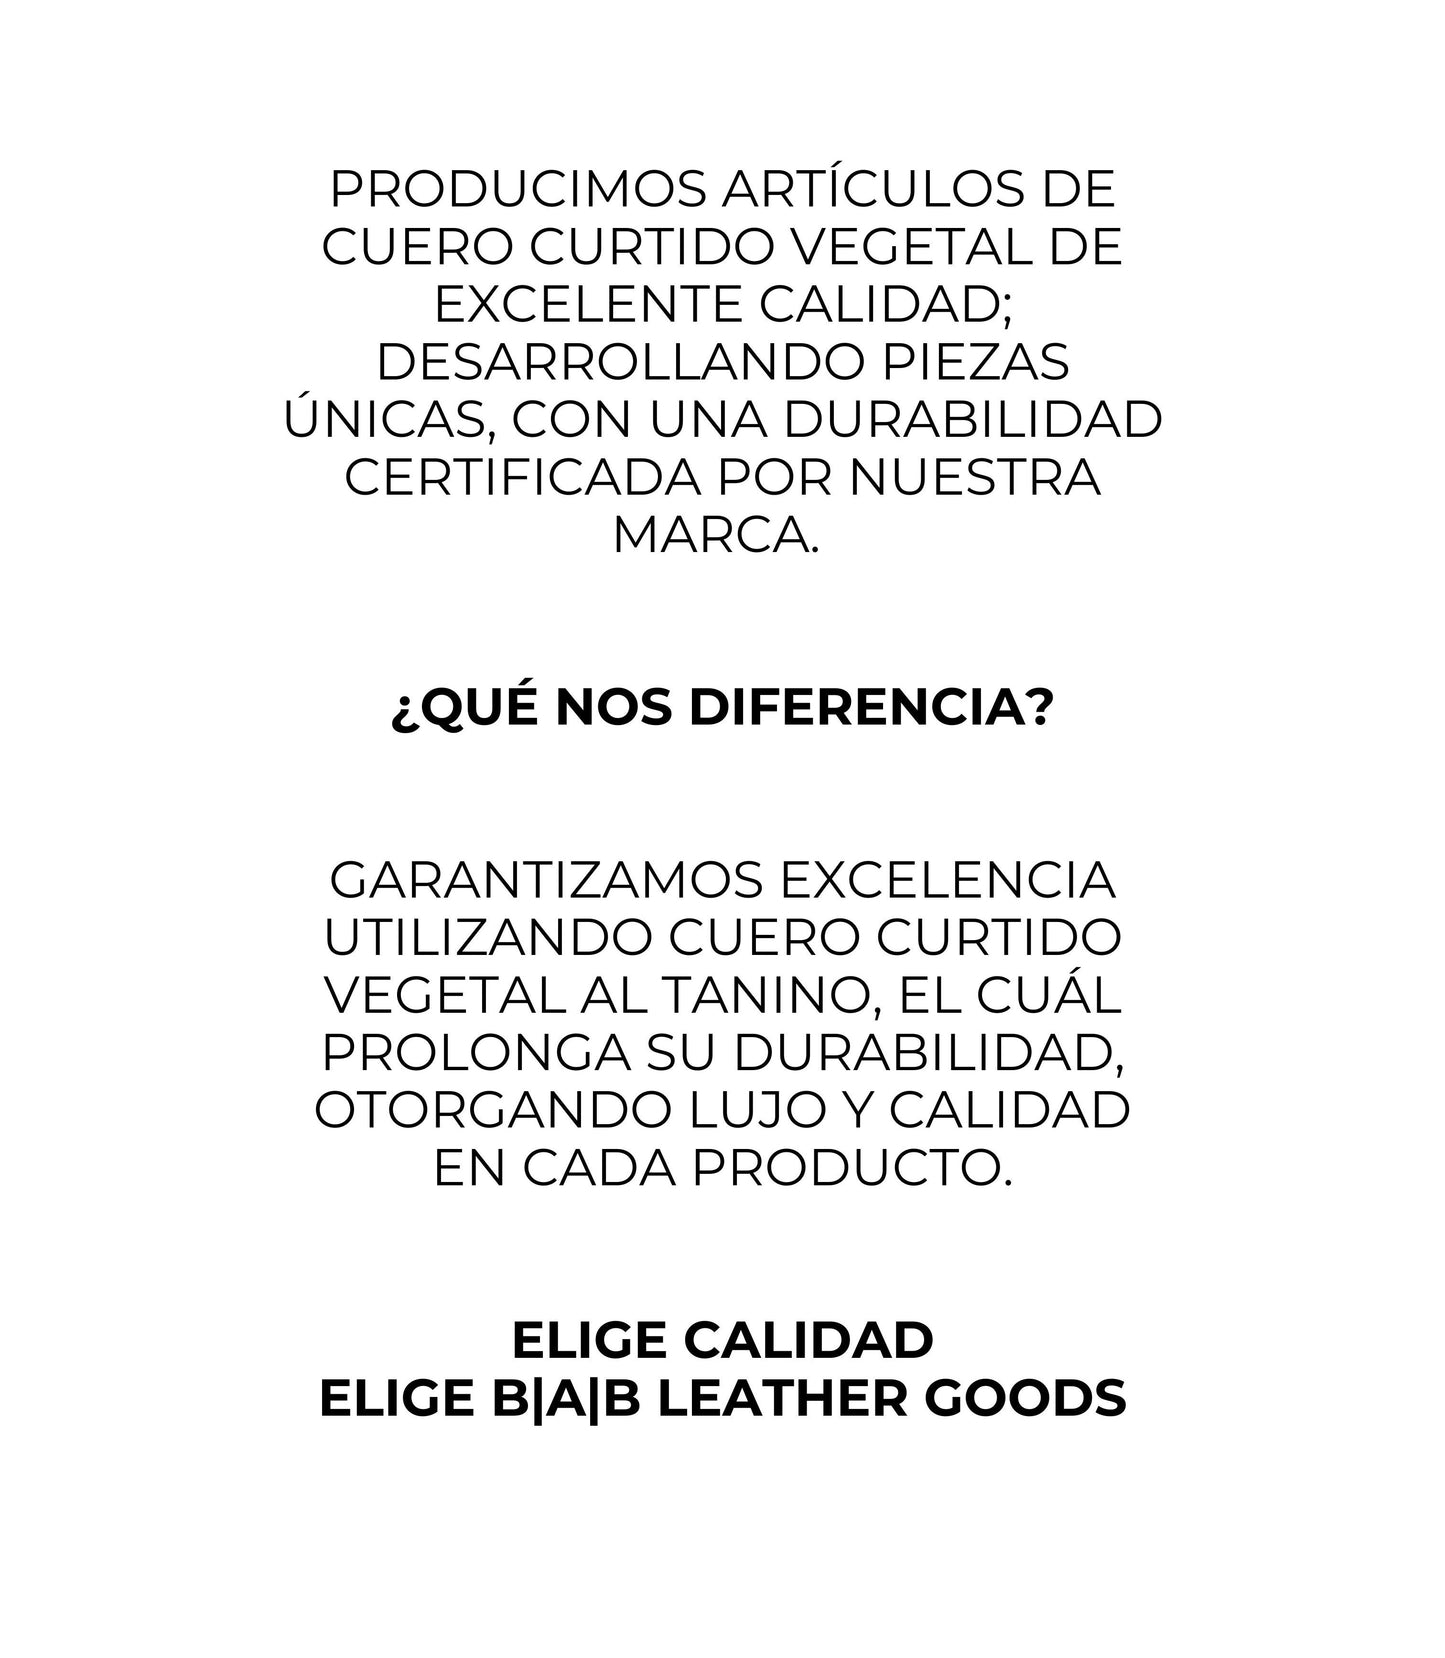 Full-Grain Genuine vegetable-tanned Leather Case & Black Elastic Rope Crossbody for iPhone.- F34